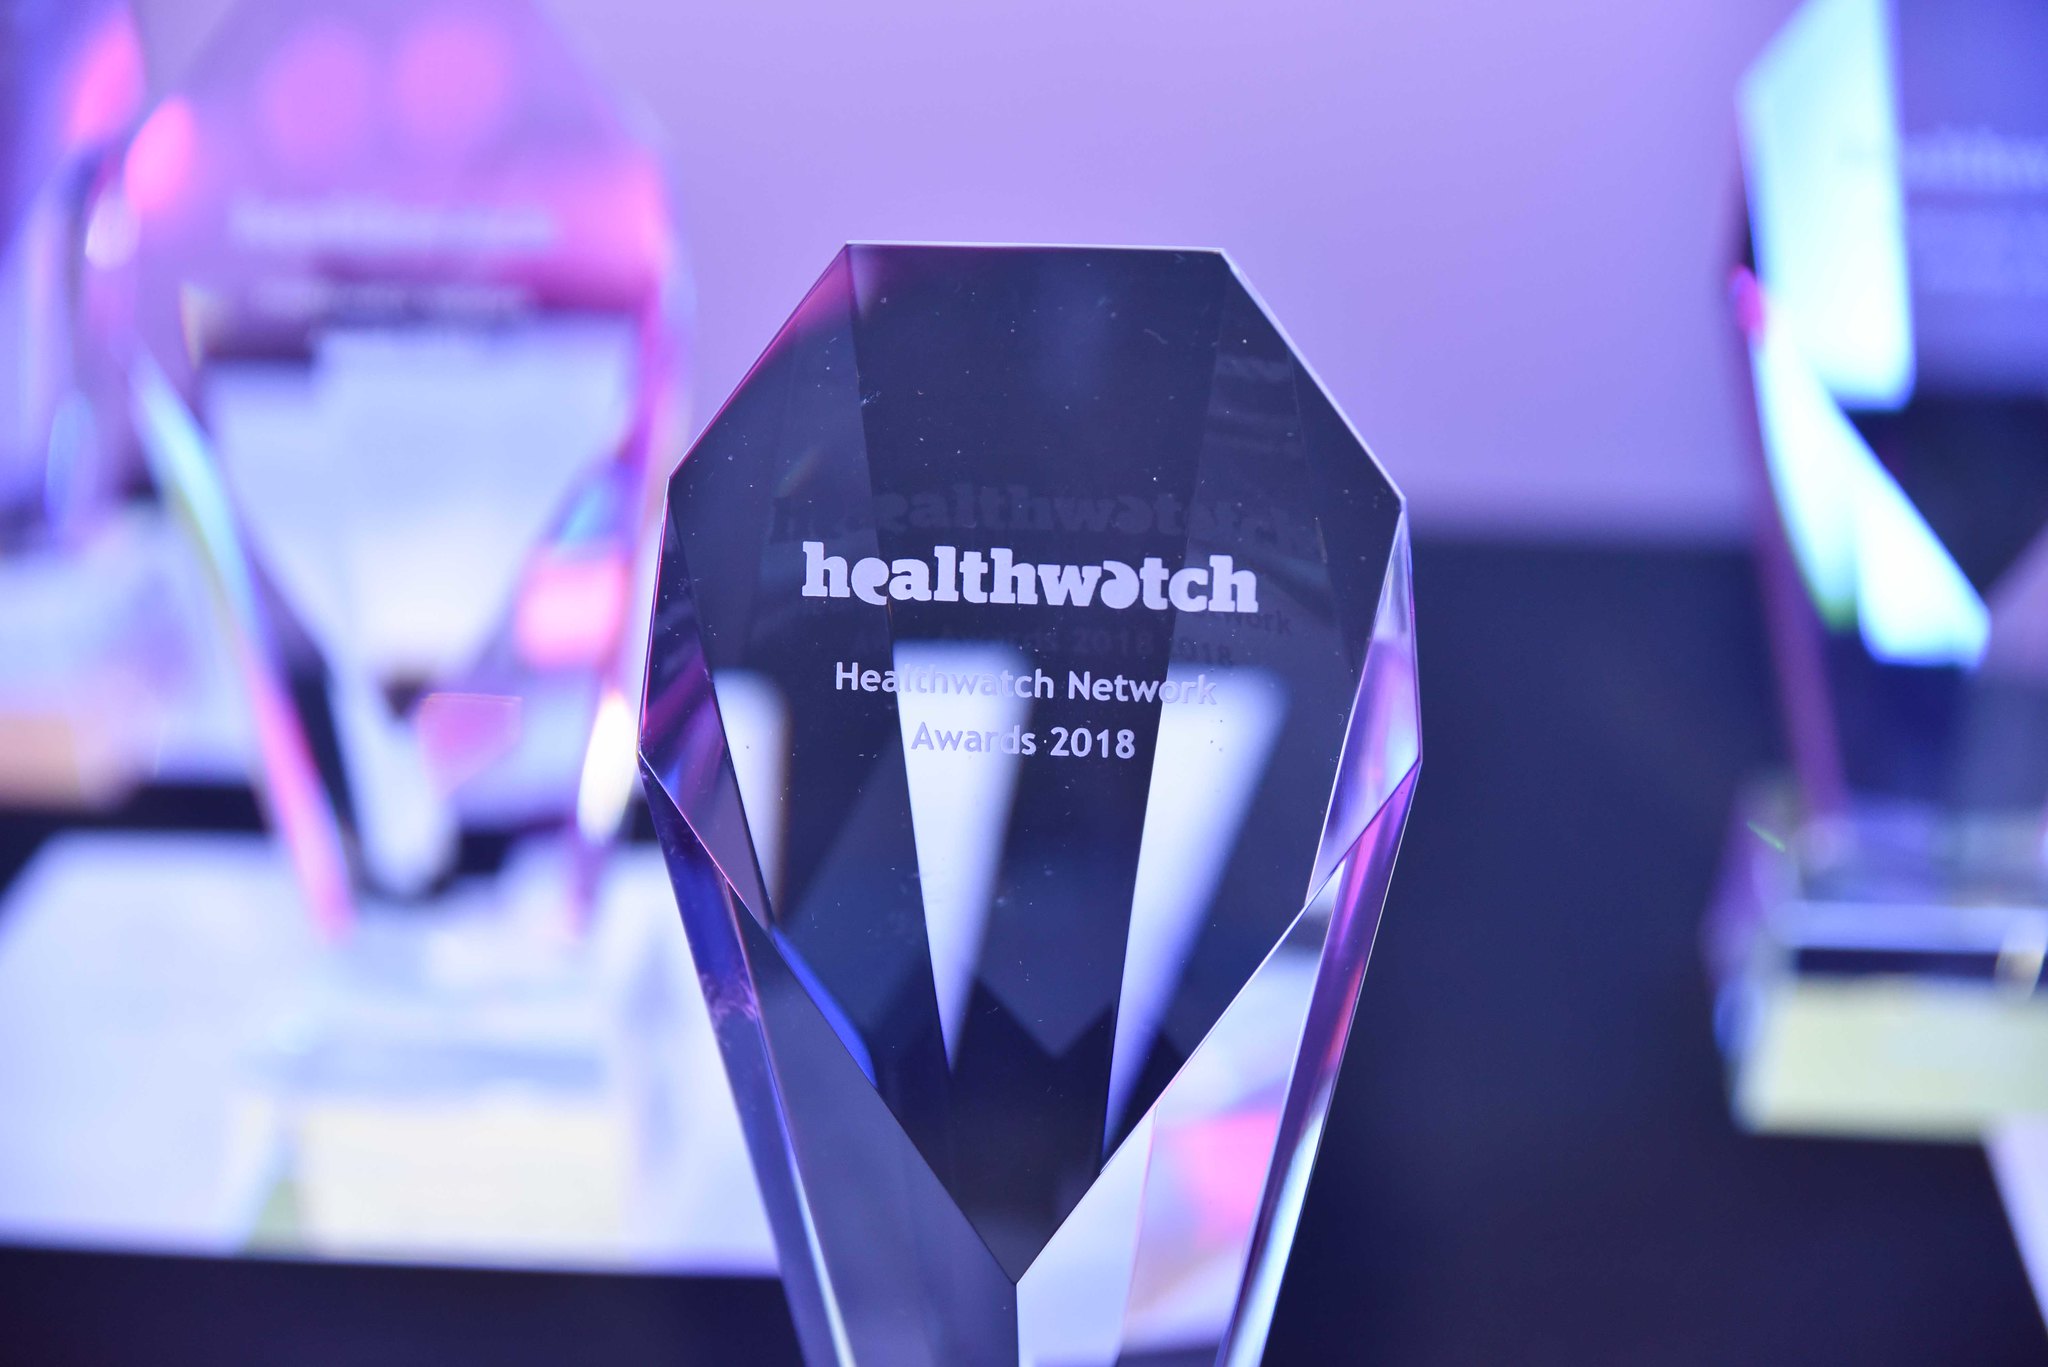 Healthwatch Network Award 2018